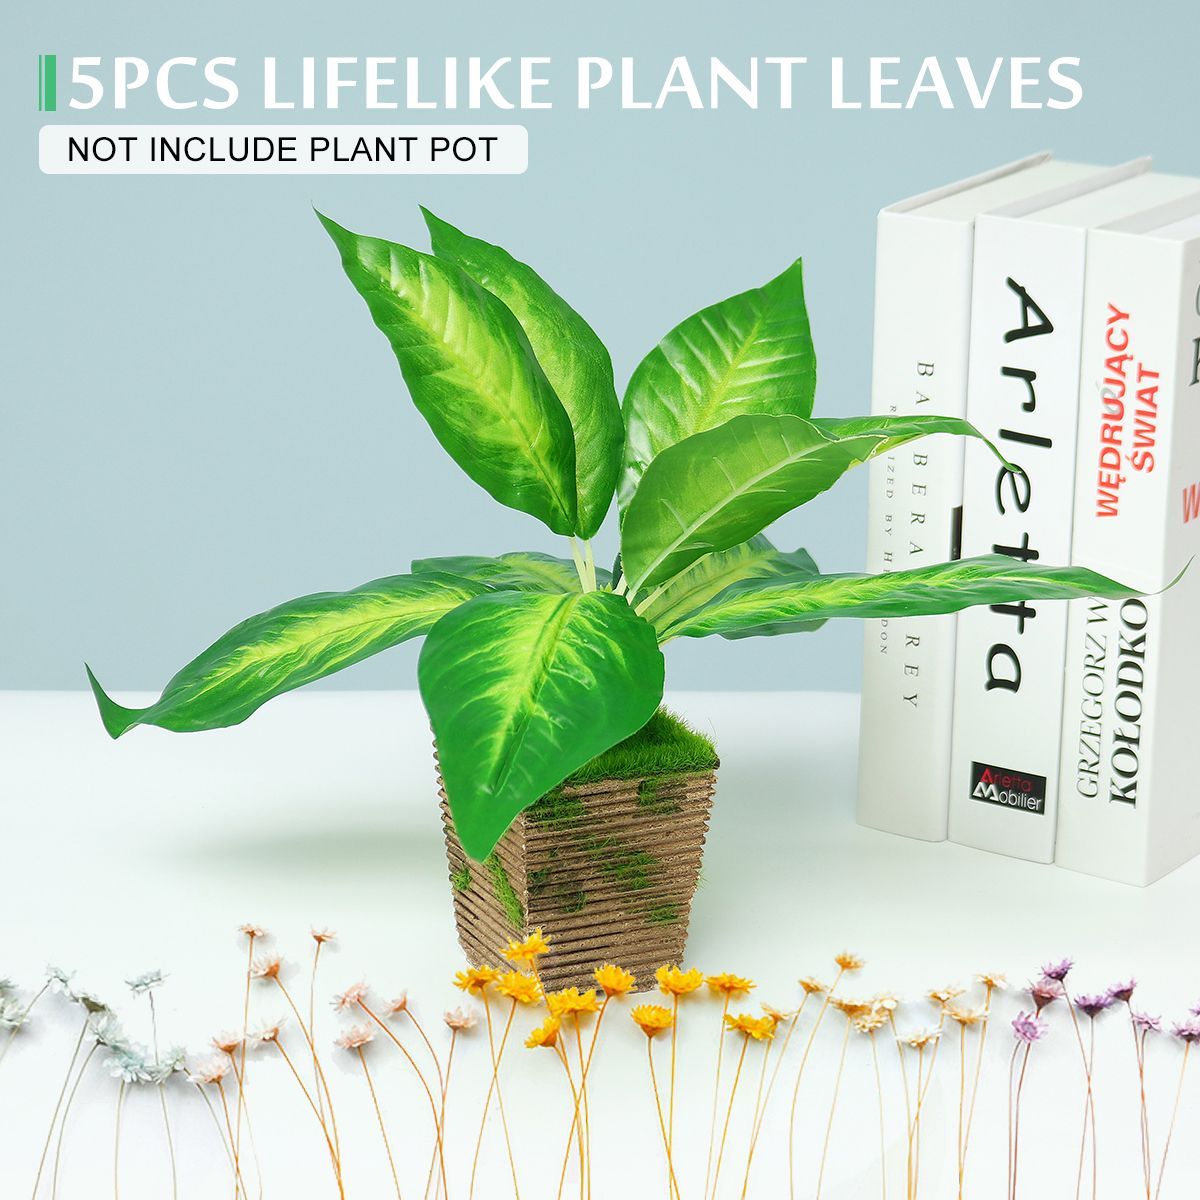 Lifelike-Artificial-Plants-PseudoLeaf-Palm-Leaves-Grass-Pot-Home-Bush-Wall-Decorations-1569842